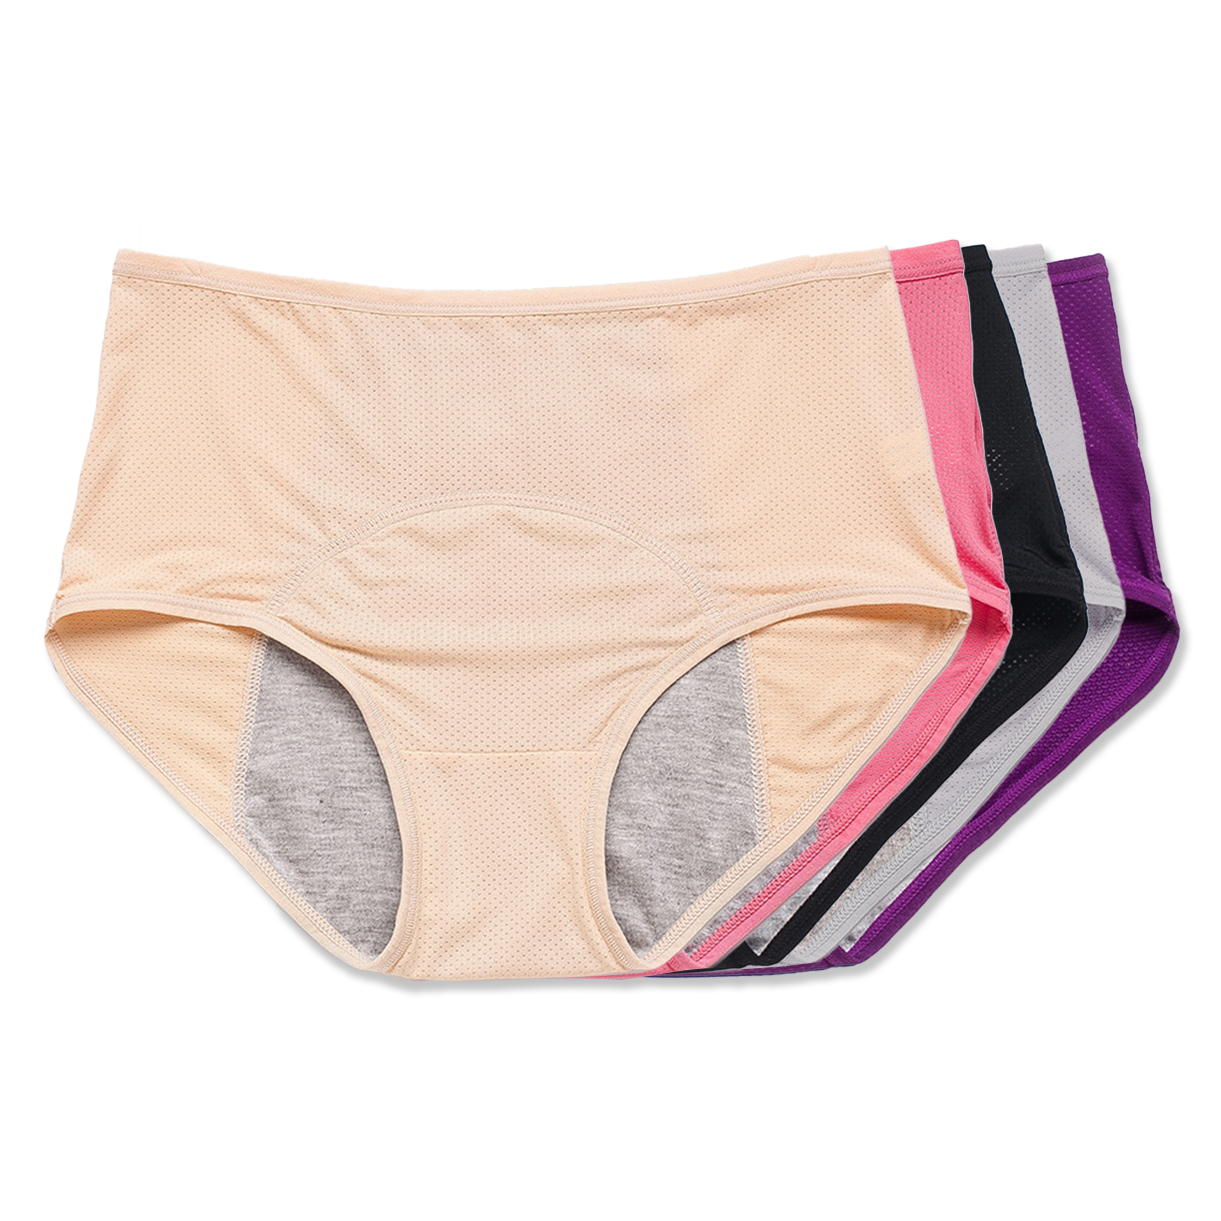 Everdries Leakproof Panties for Over 60#s, Mesh Period Panties